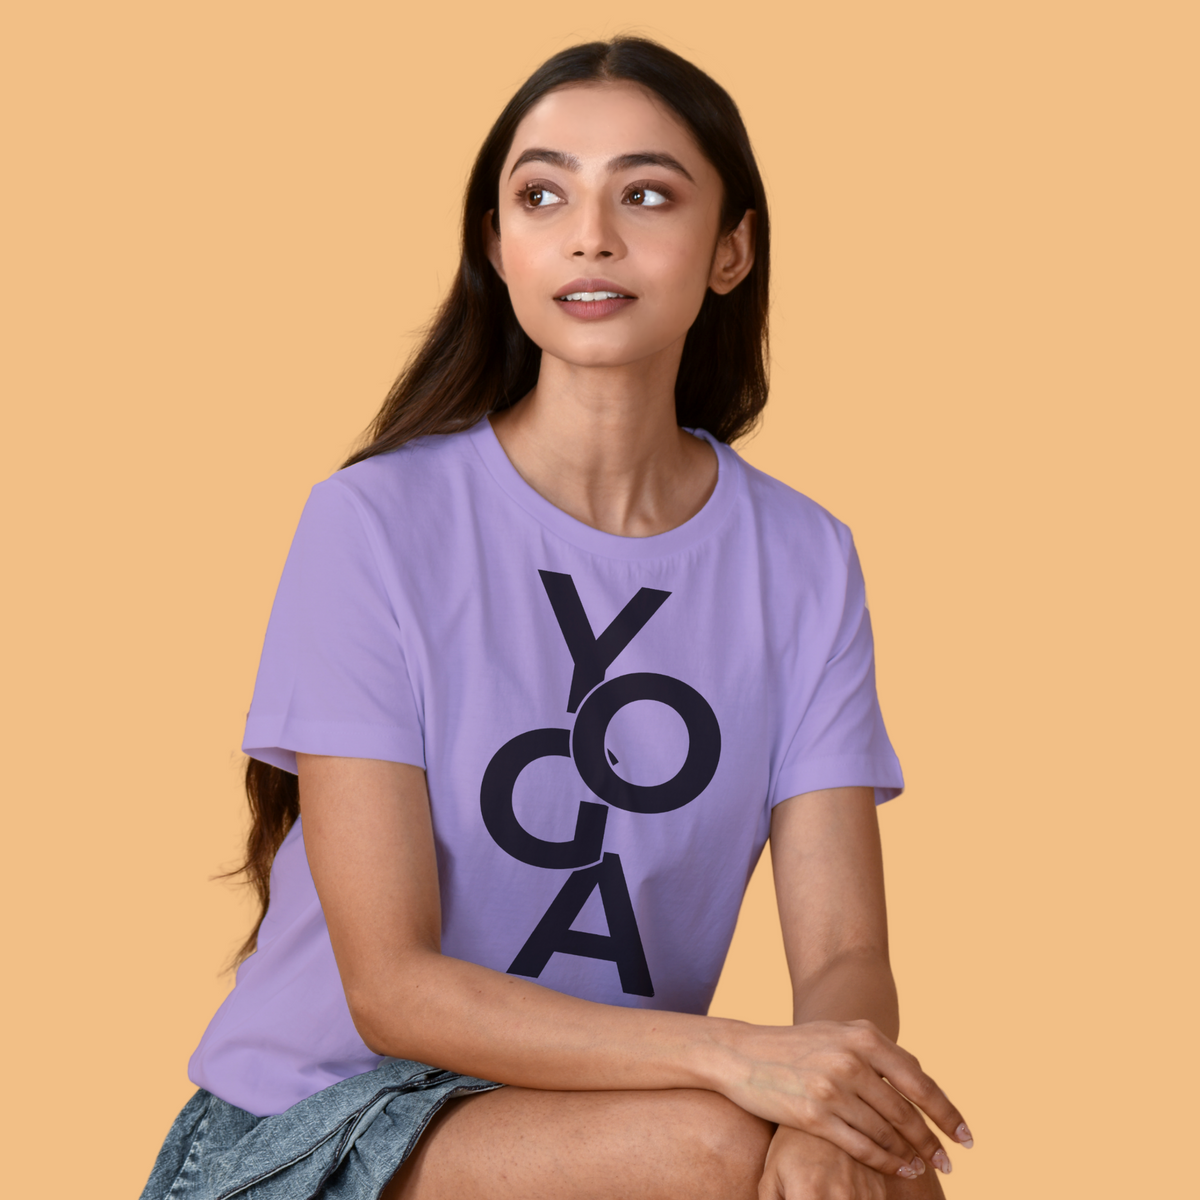 I Love Yoga Kids Cotton Printed T-shirt Girls For from Gorgit